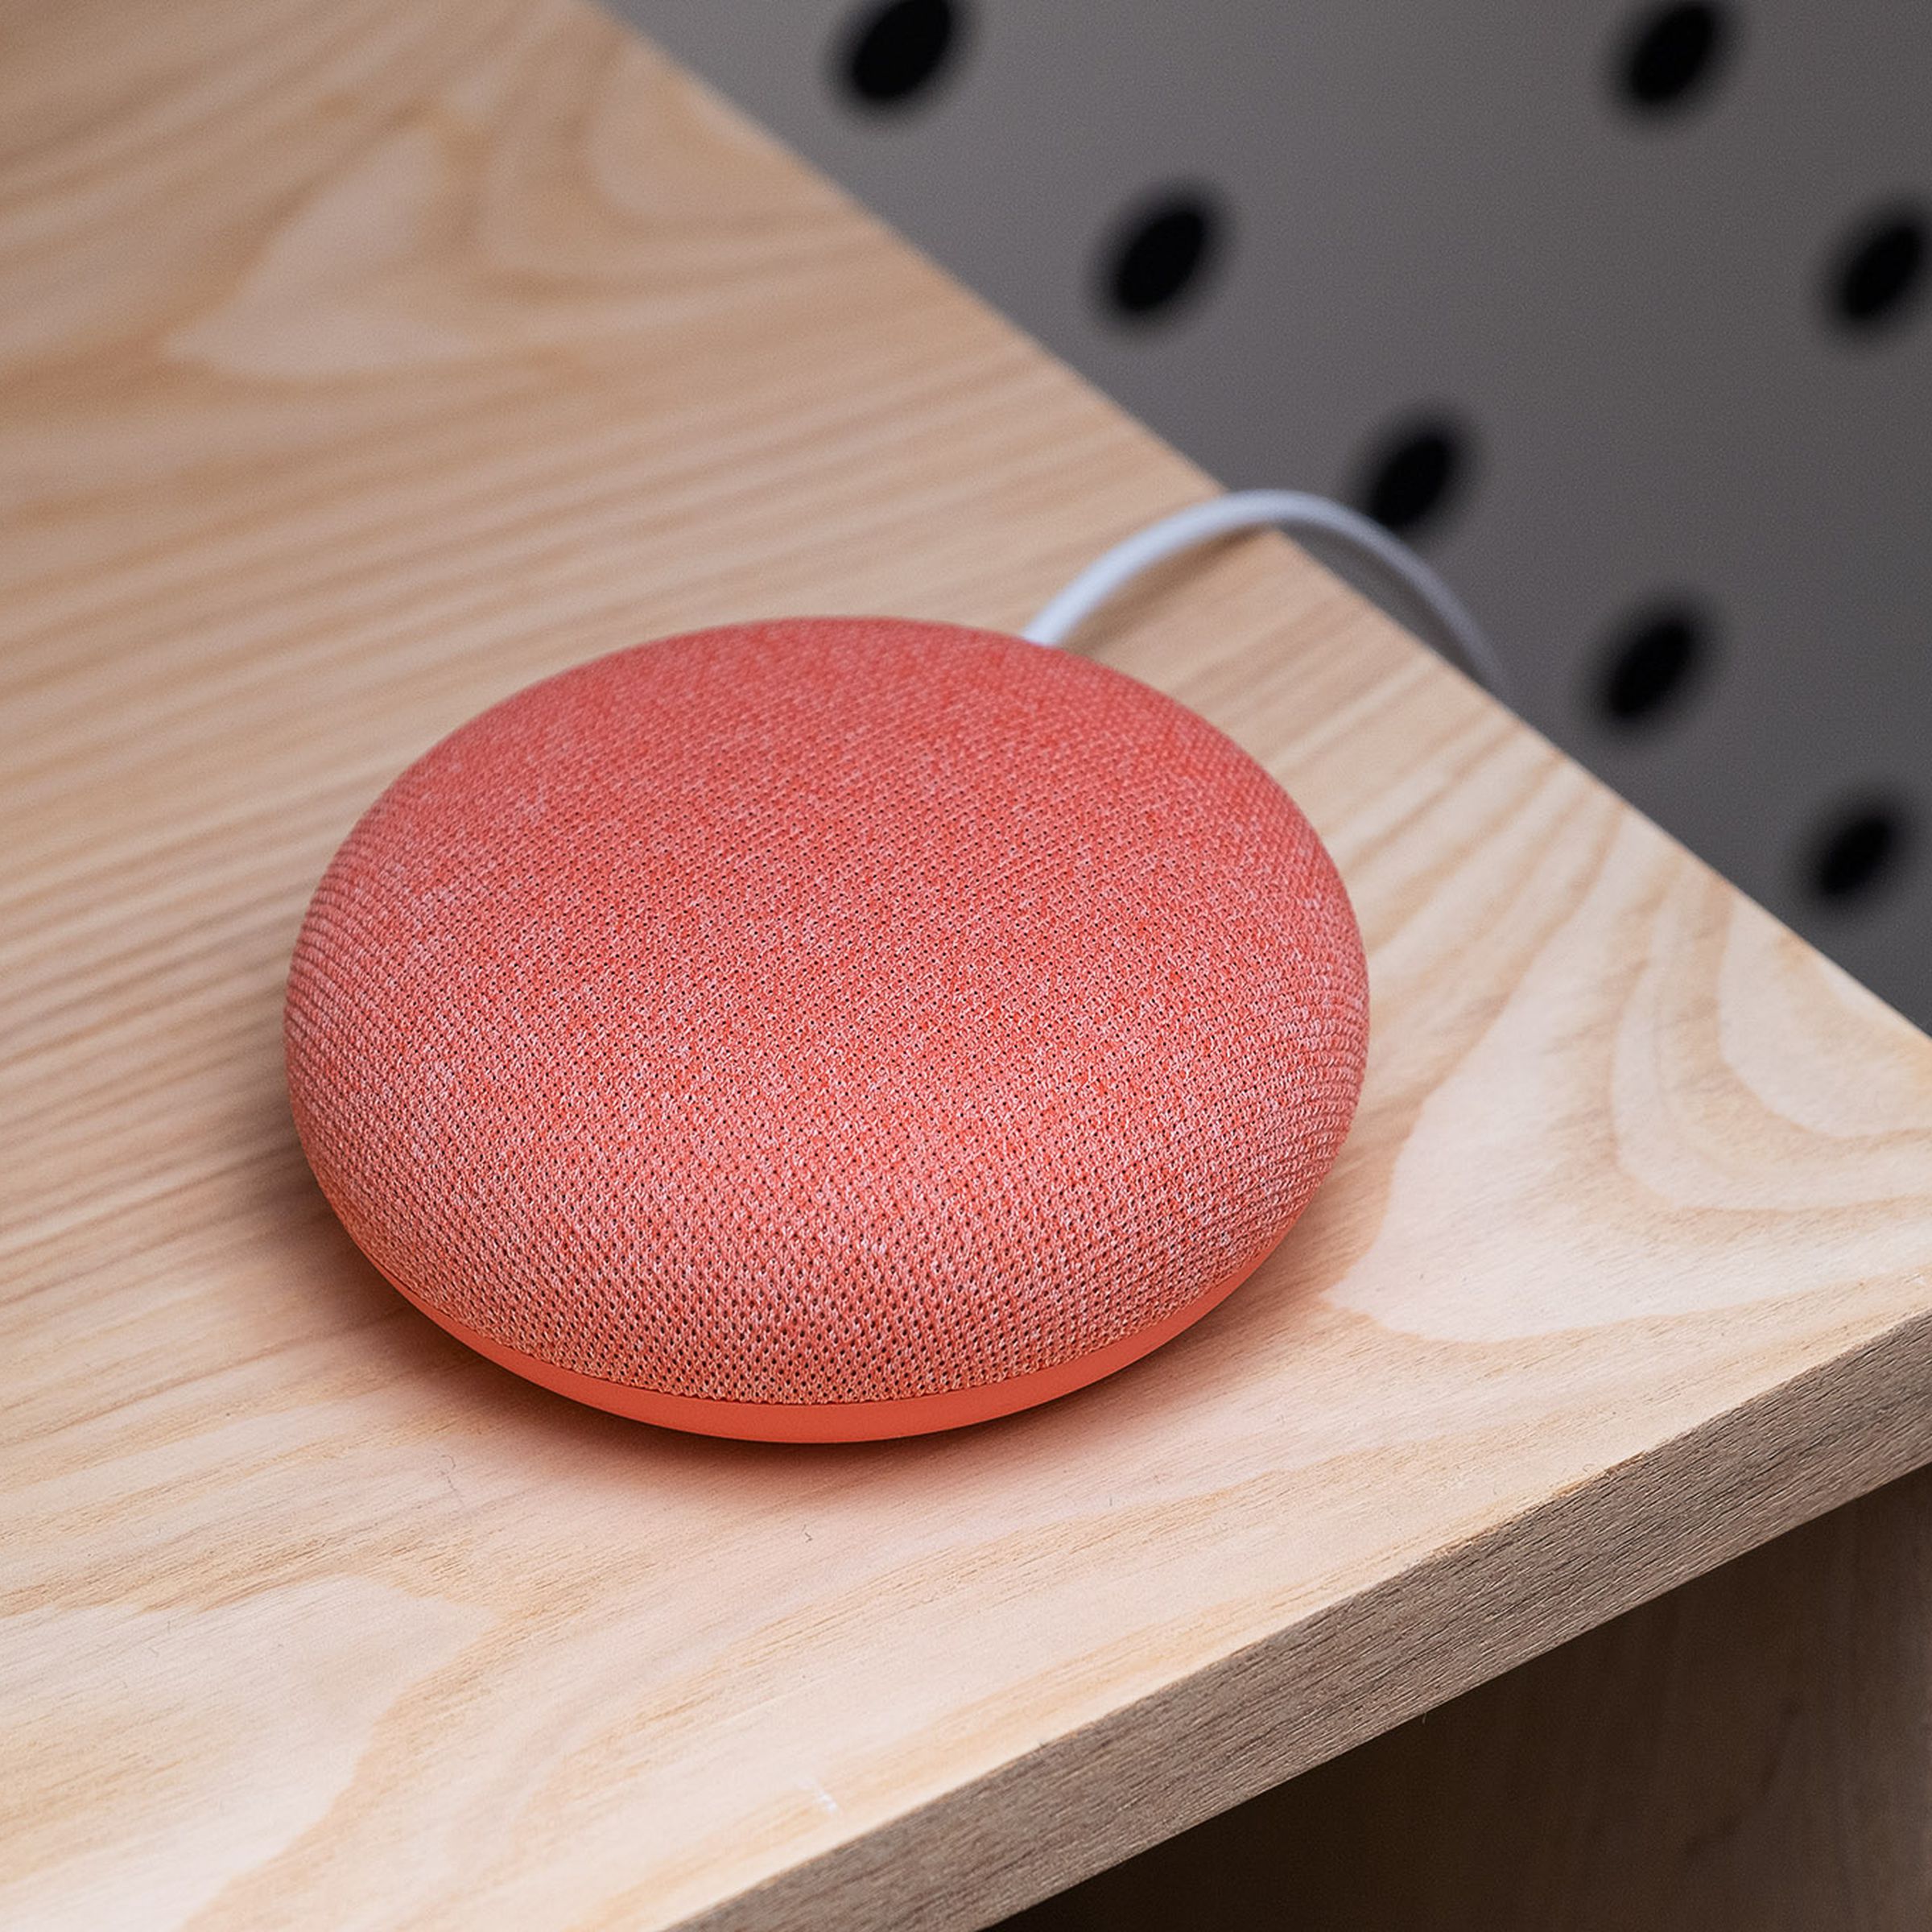 A coral colored Google Nest Mini smart speaker sitting on a wood desk.